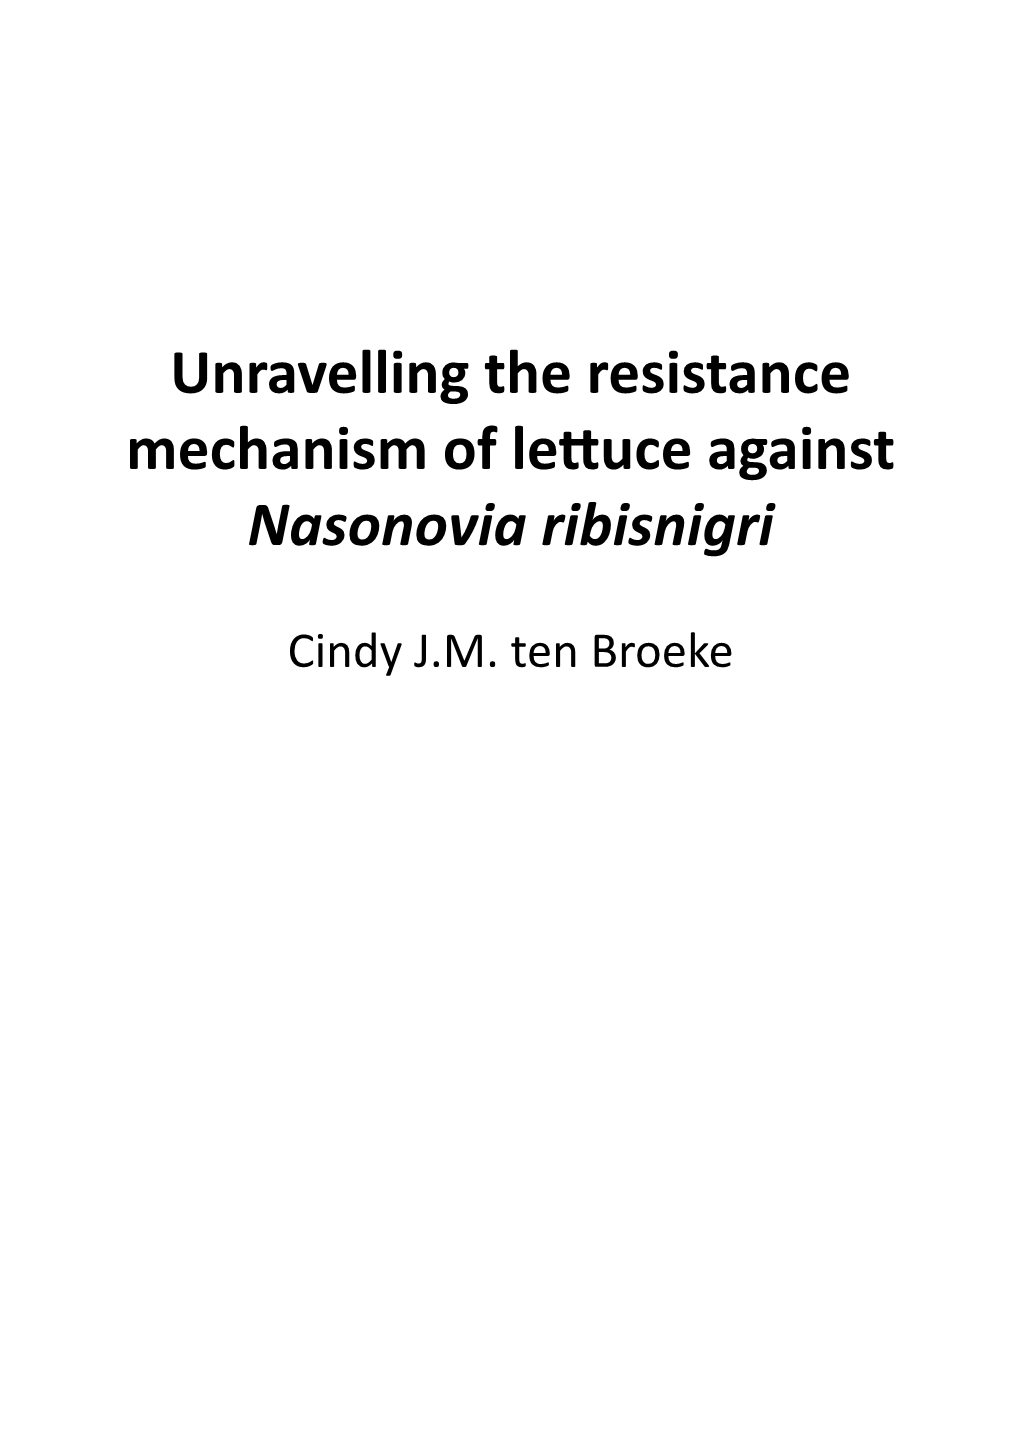 Unravelling the Resistance Mechanism of Lettuce Against Nasonovia Ribisnigri